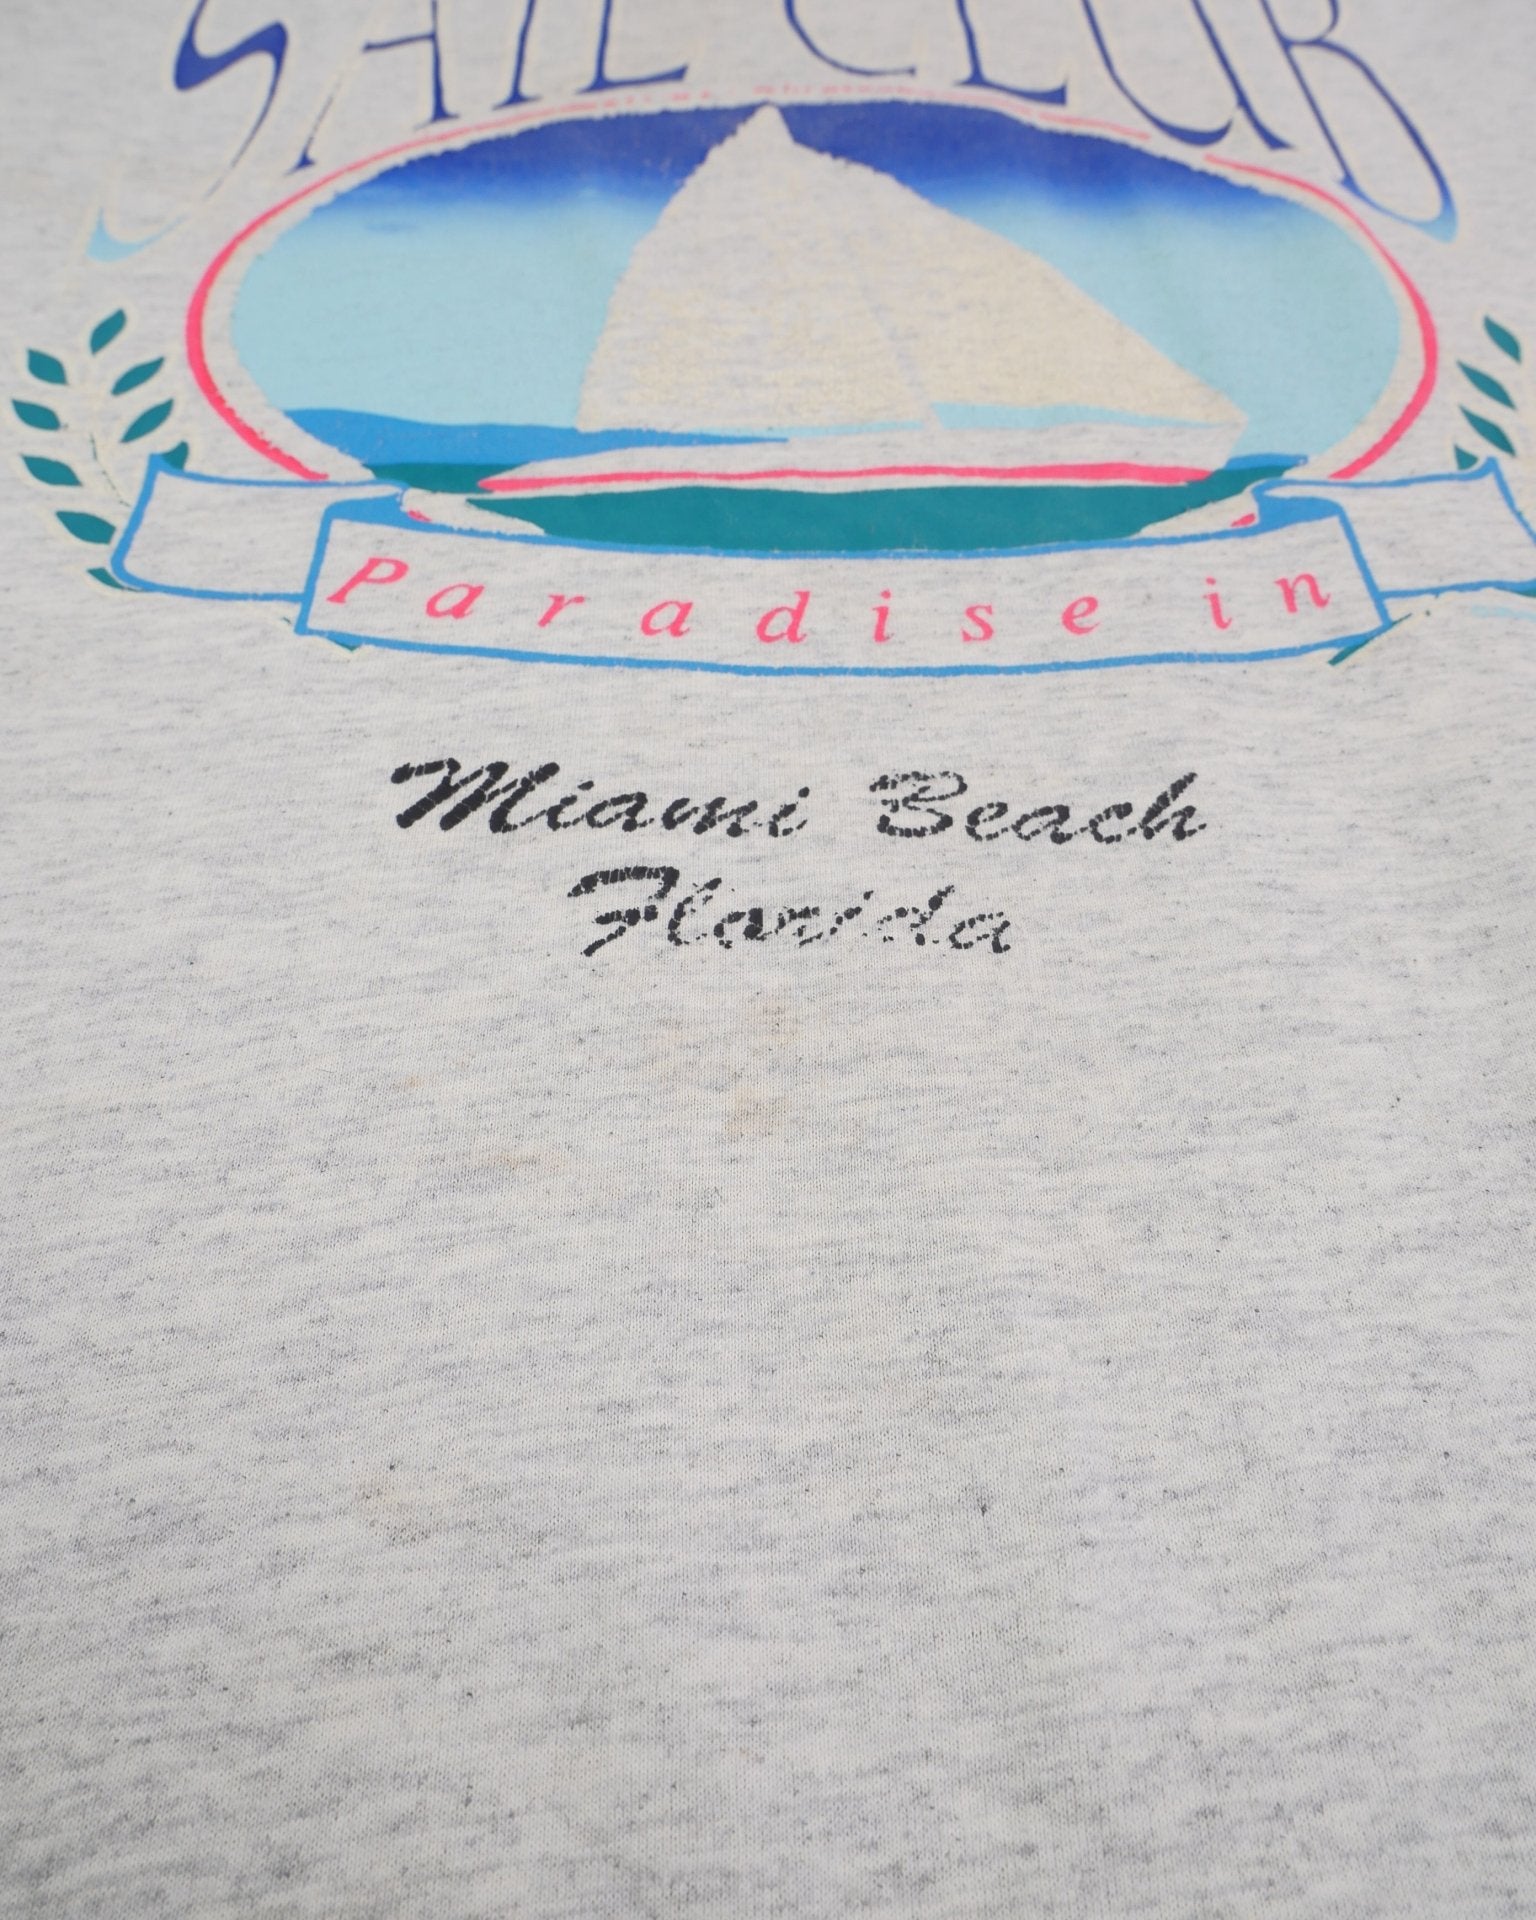 Sail Club Miami Beach Florida printed Graphic Shirt - Peeces